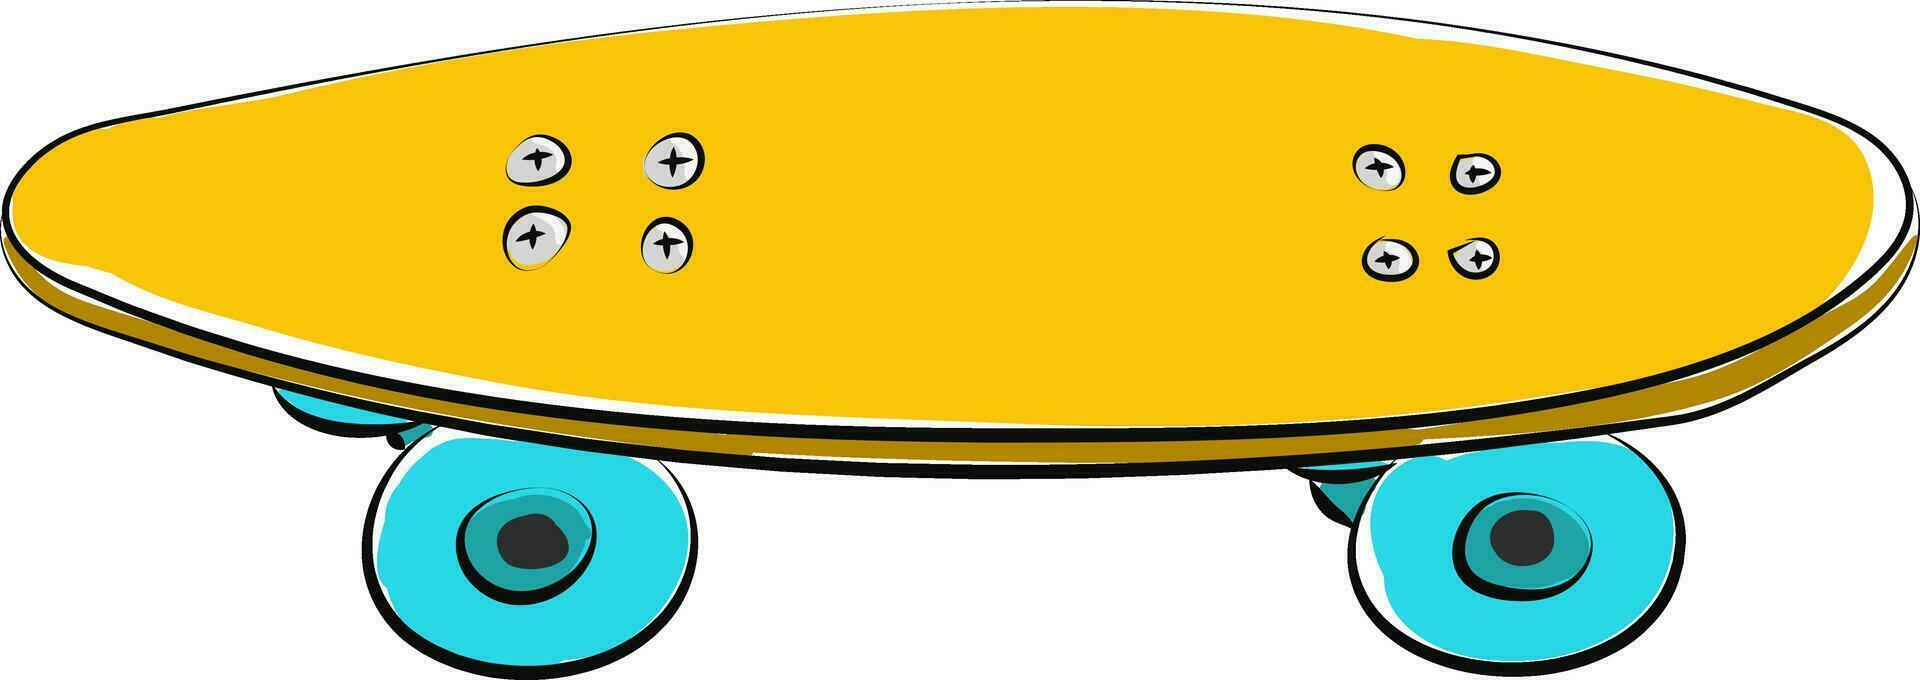 Skateboard, Vektor oder Farbe Illustration.